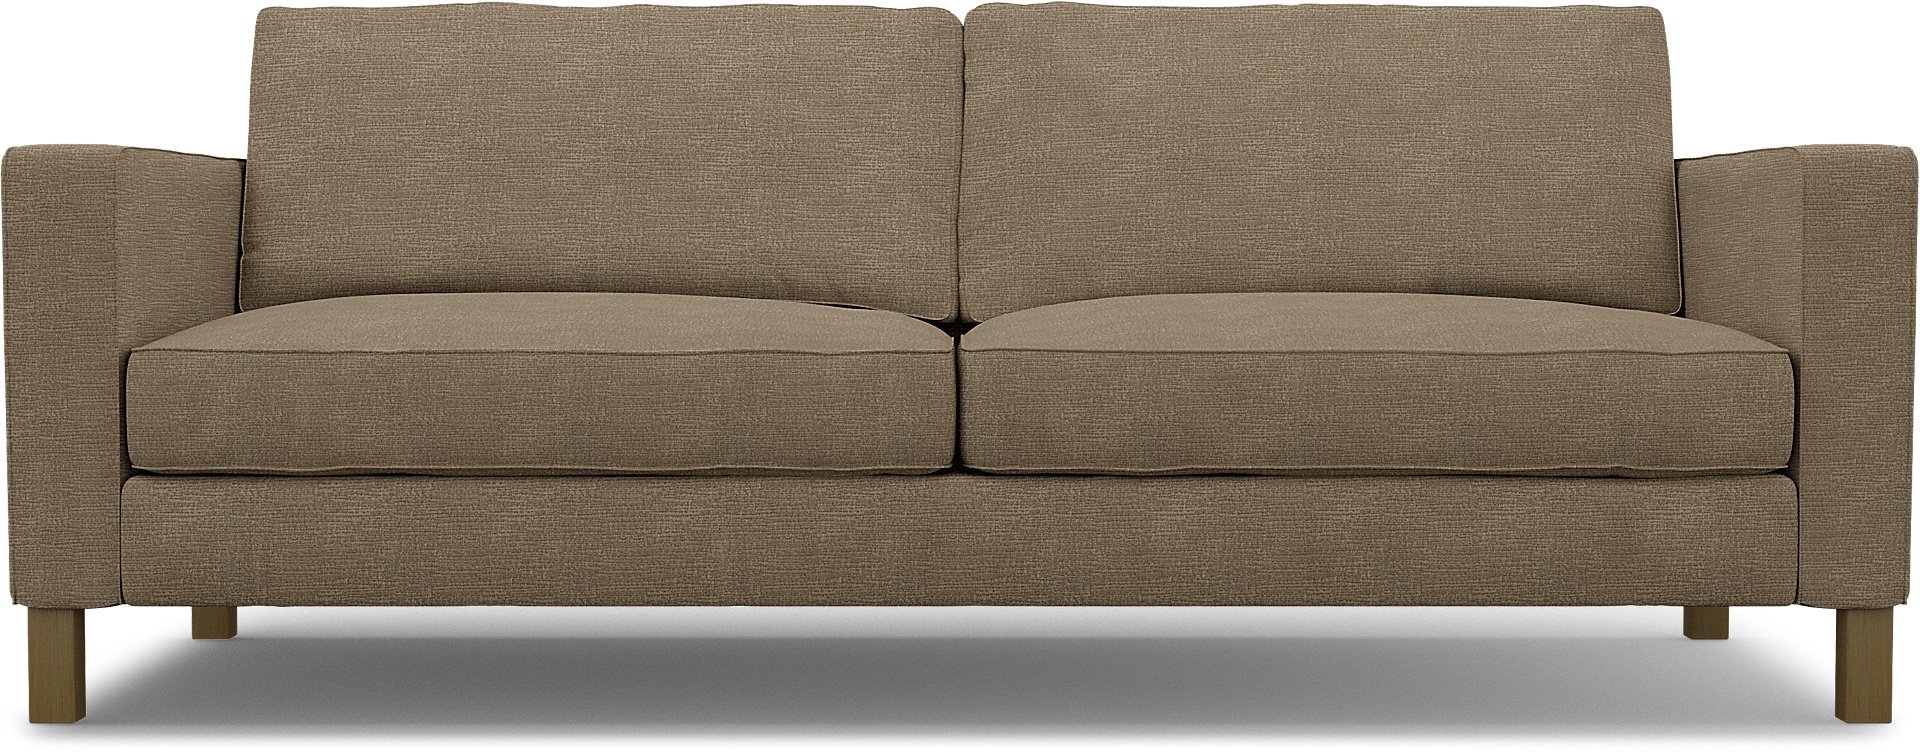 IKEA - Karlstad 3 Seater Sofa Cover, Camel, Boucle & Texture - Bemz